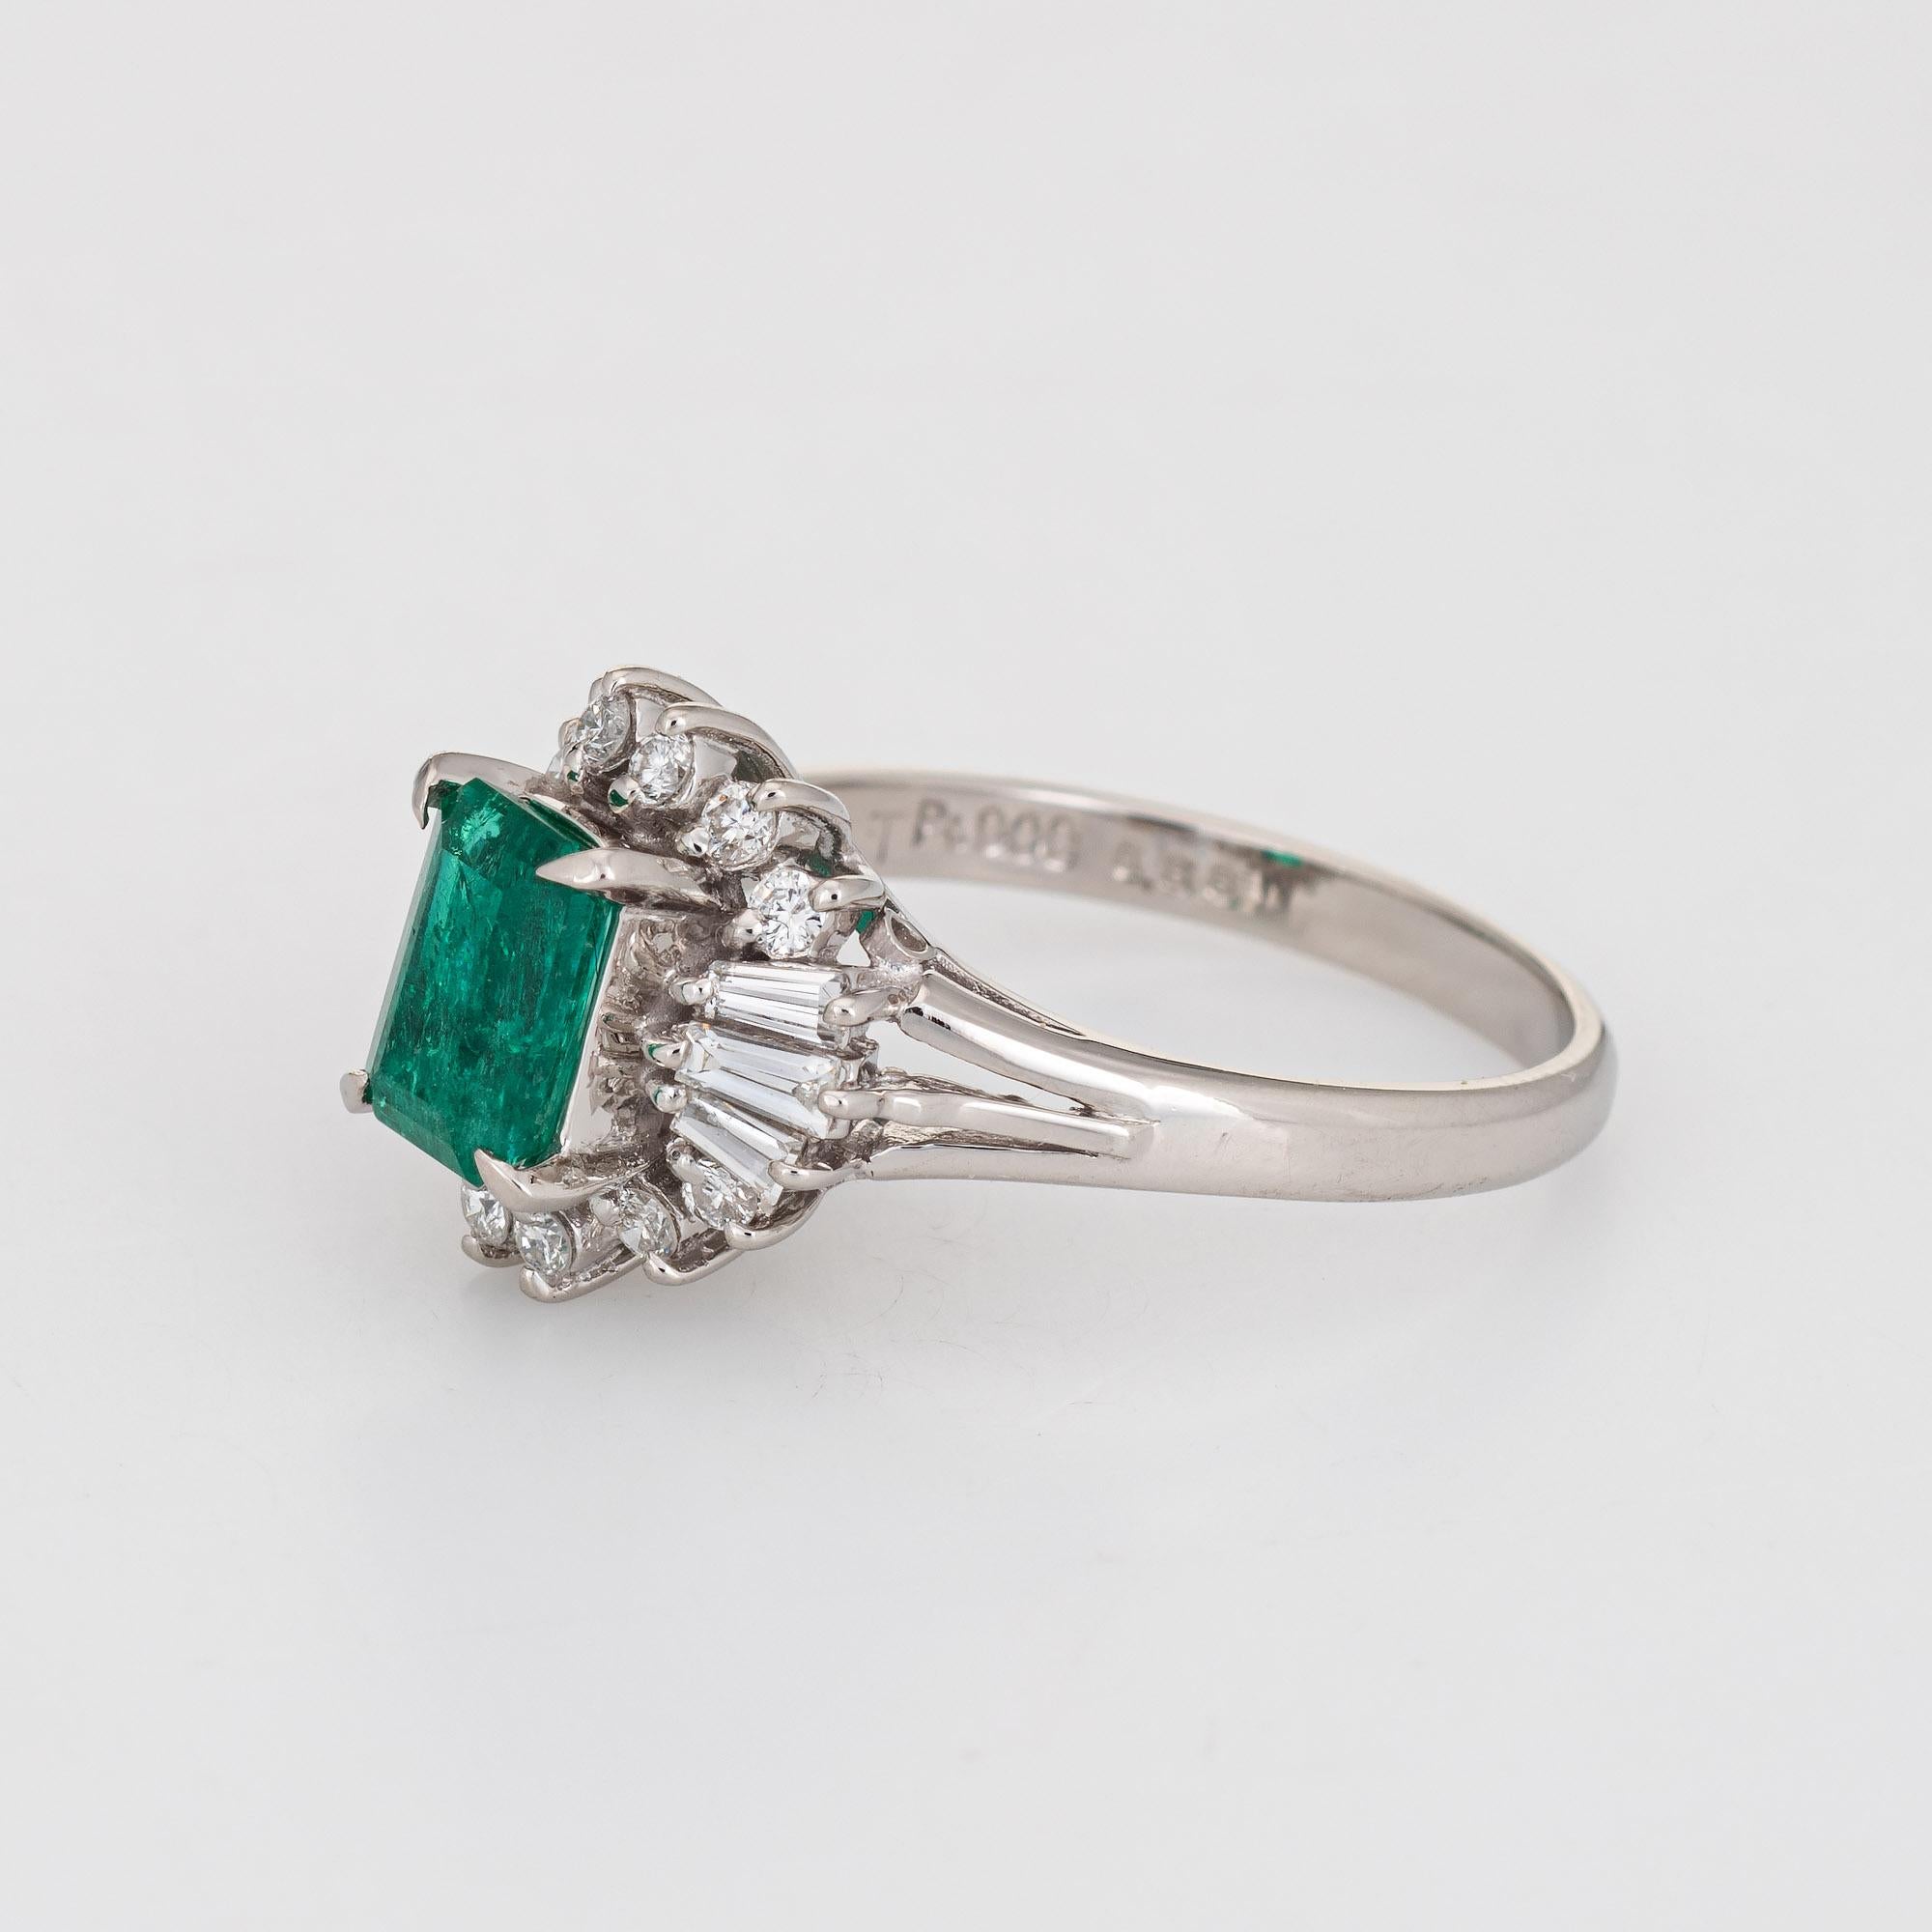 Antique Cushion Cut Emerald Diamond Ring Estate Platinum Gemstone Engagement Jewelry Mixed Cuts 6.25